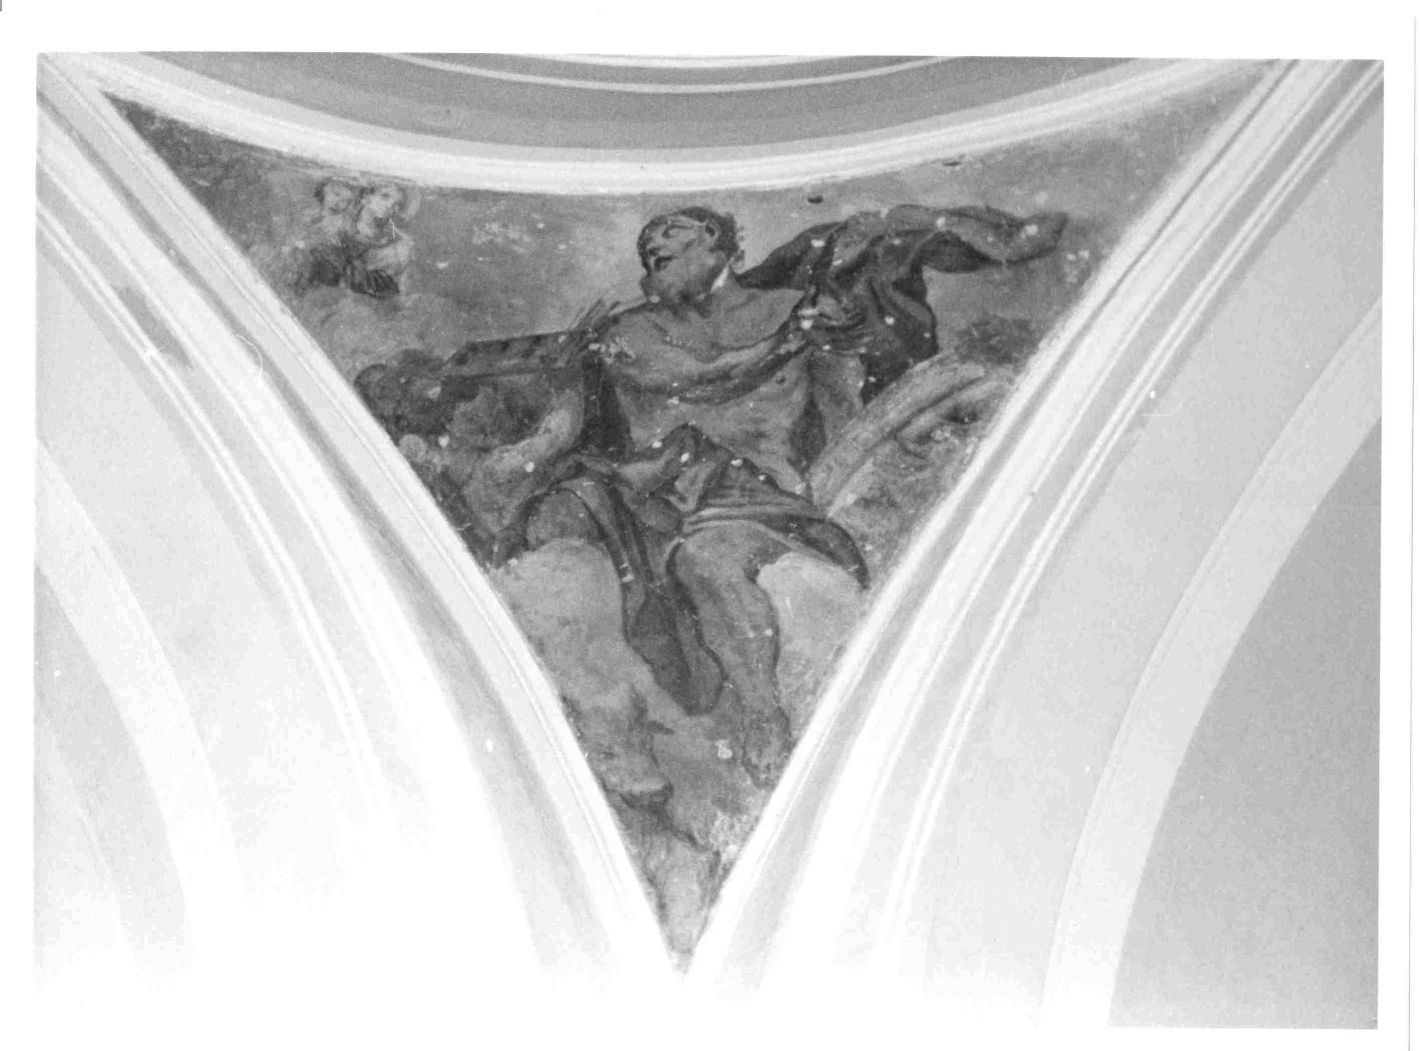 dipinto, elemento d'insieme di De Matteis Paolo (maniera) (primo quarto sec. XVIII)